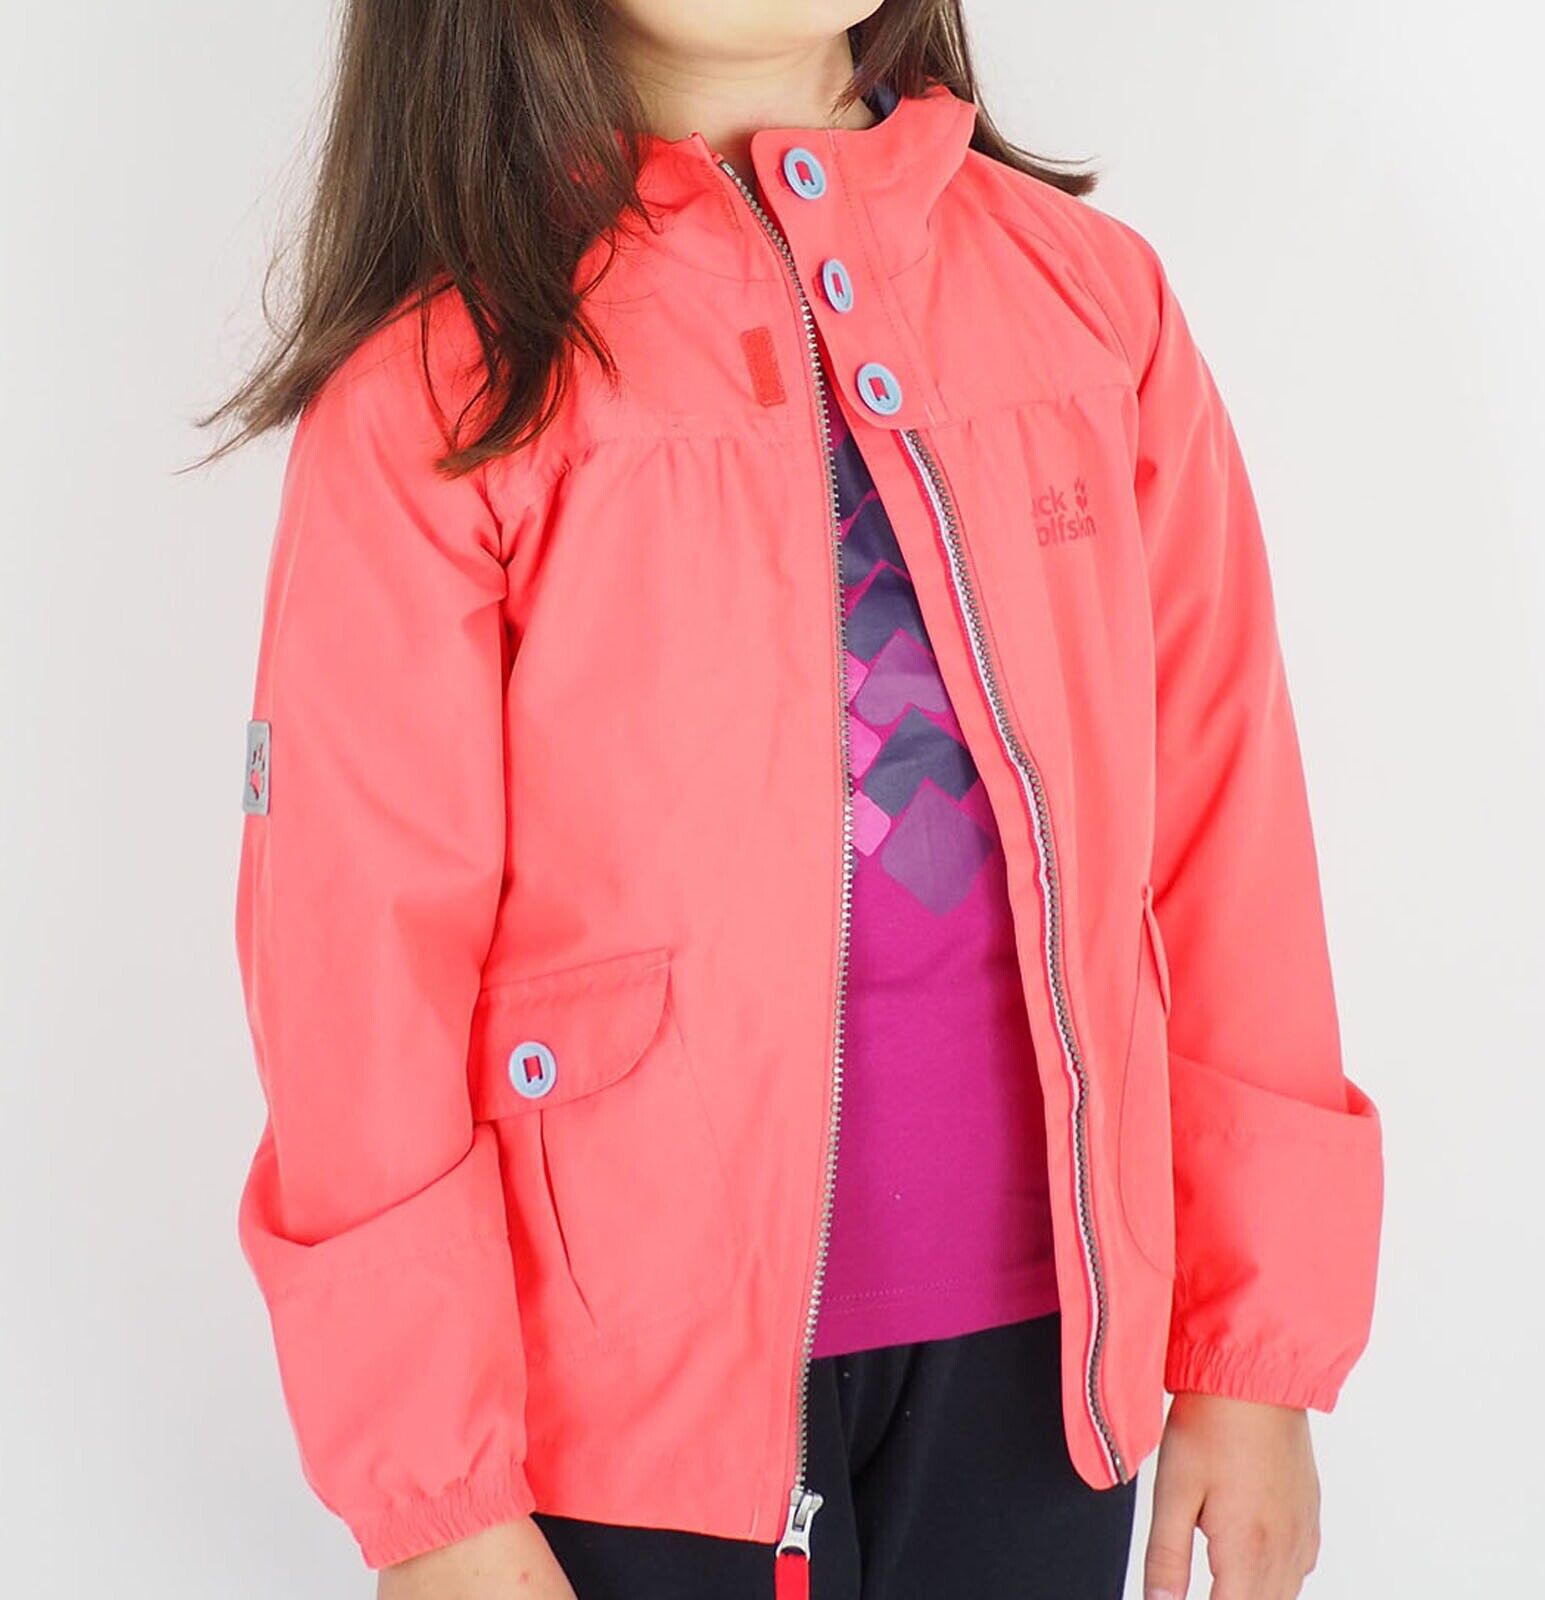 Girls Jack Wolfskin Stormwalk 1603651 Grapefruit Windproof Jacket - London Top Style